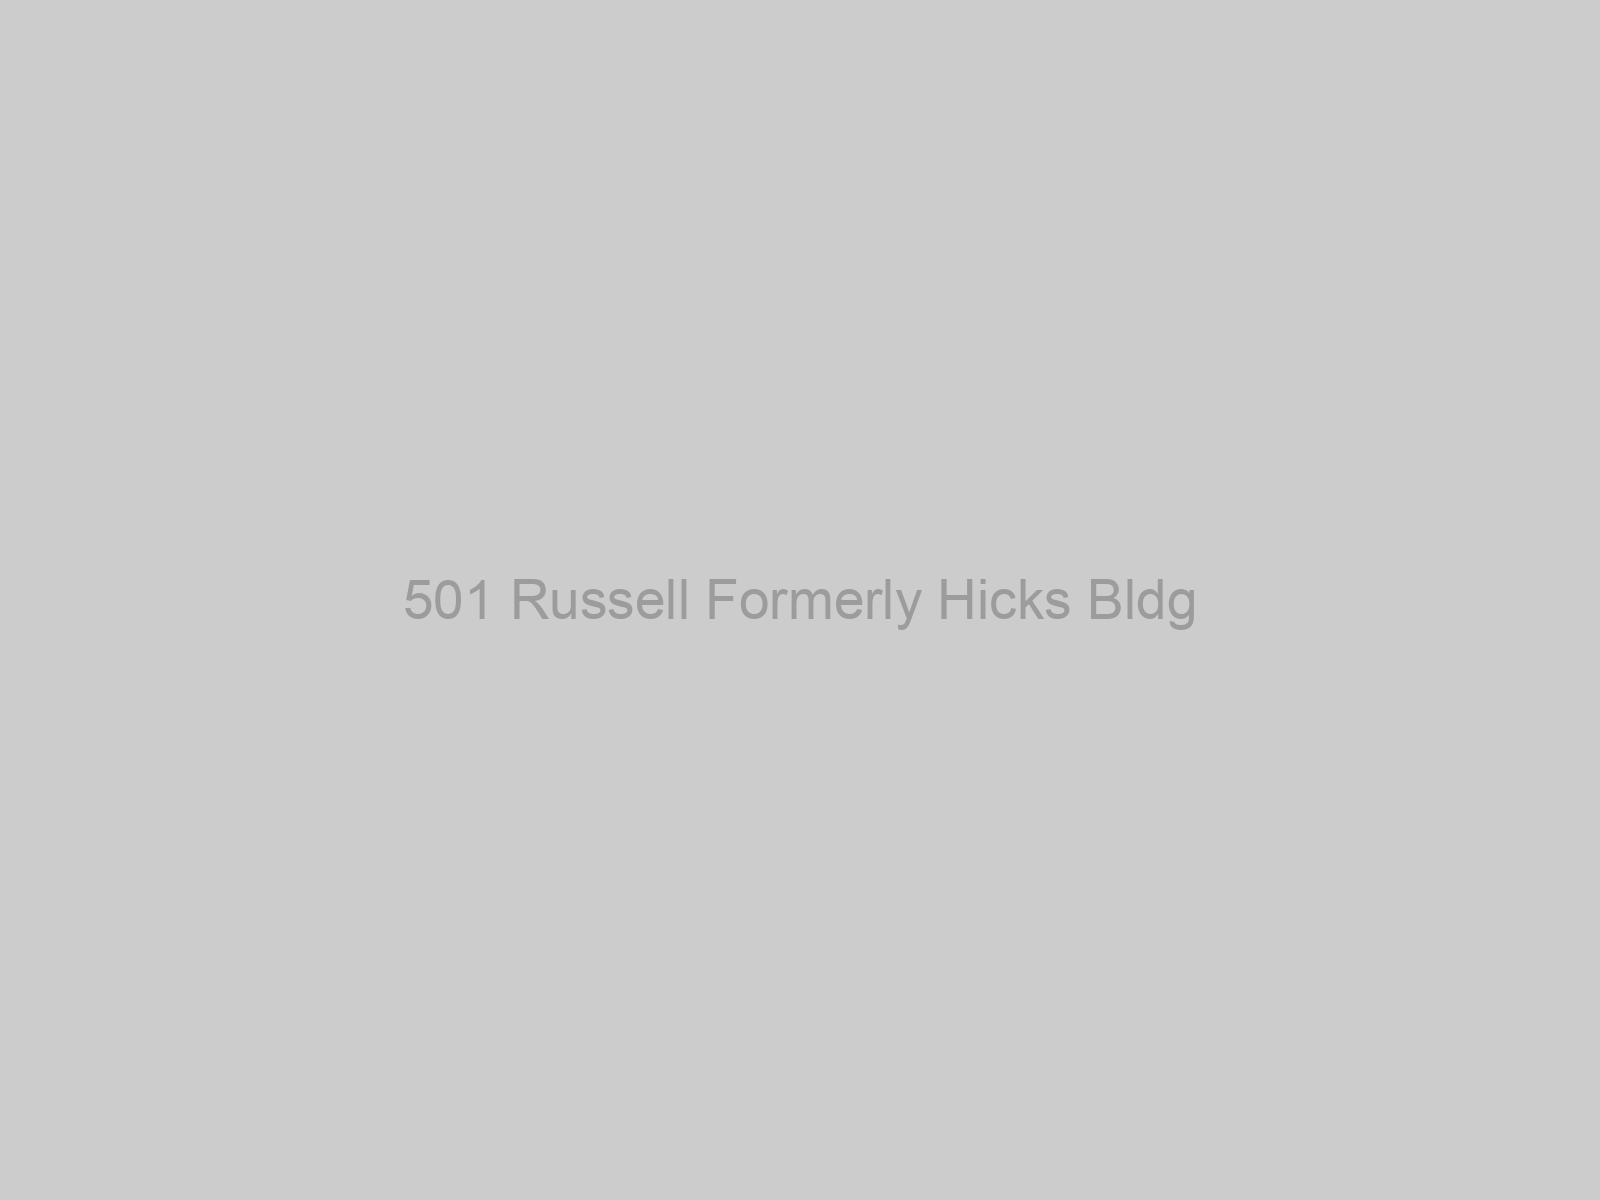 501 Russell Formerly Hicks Bldg